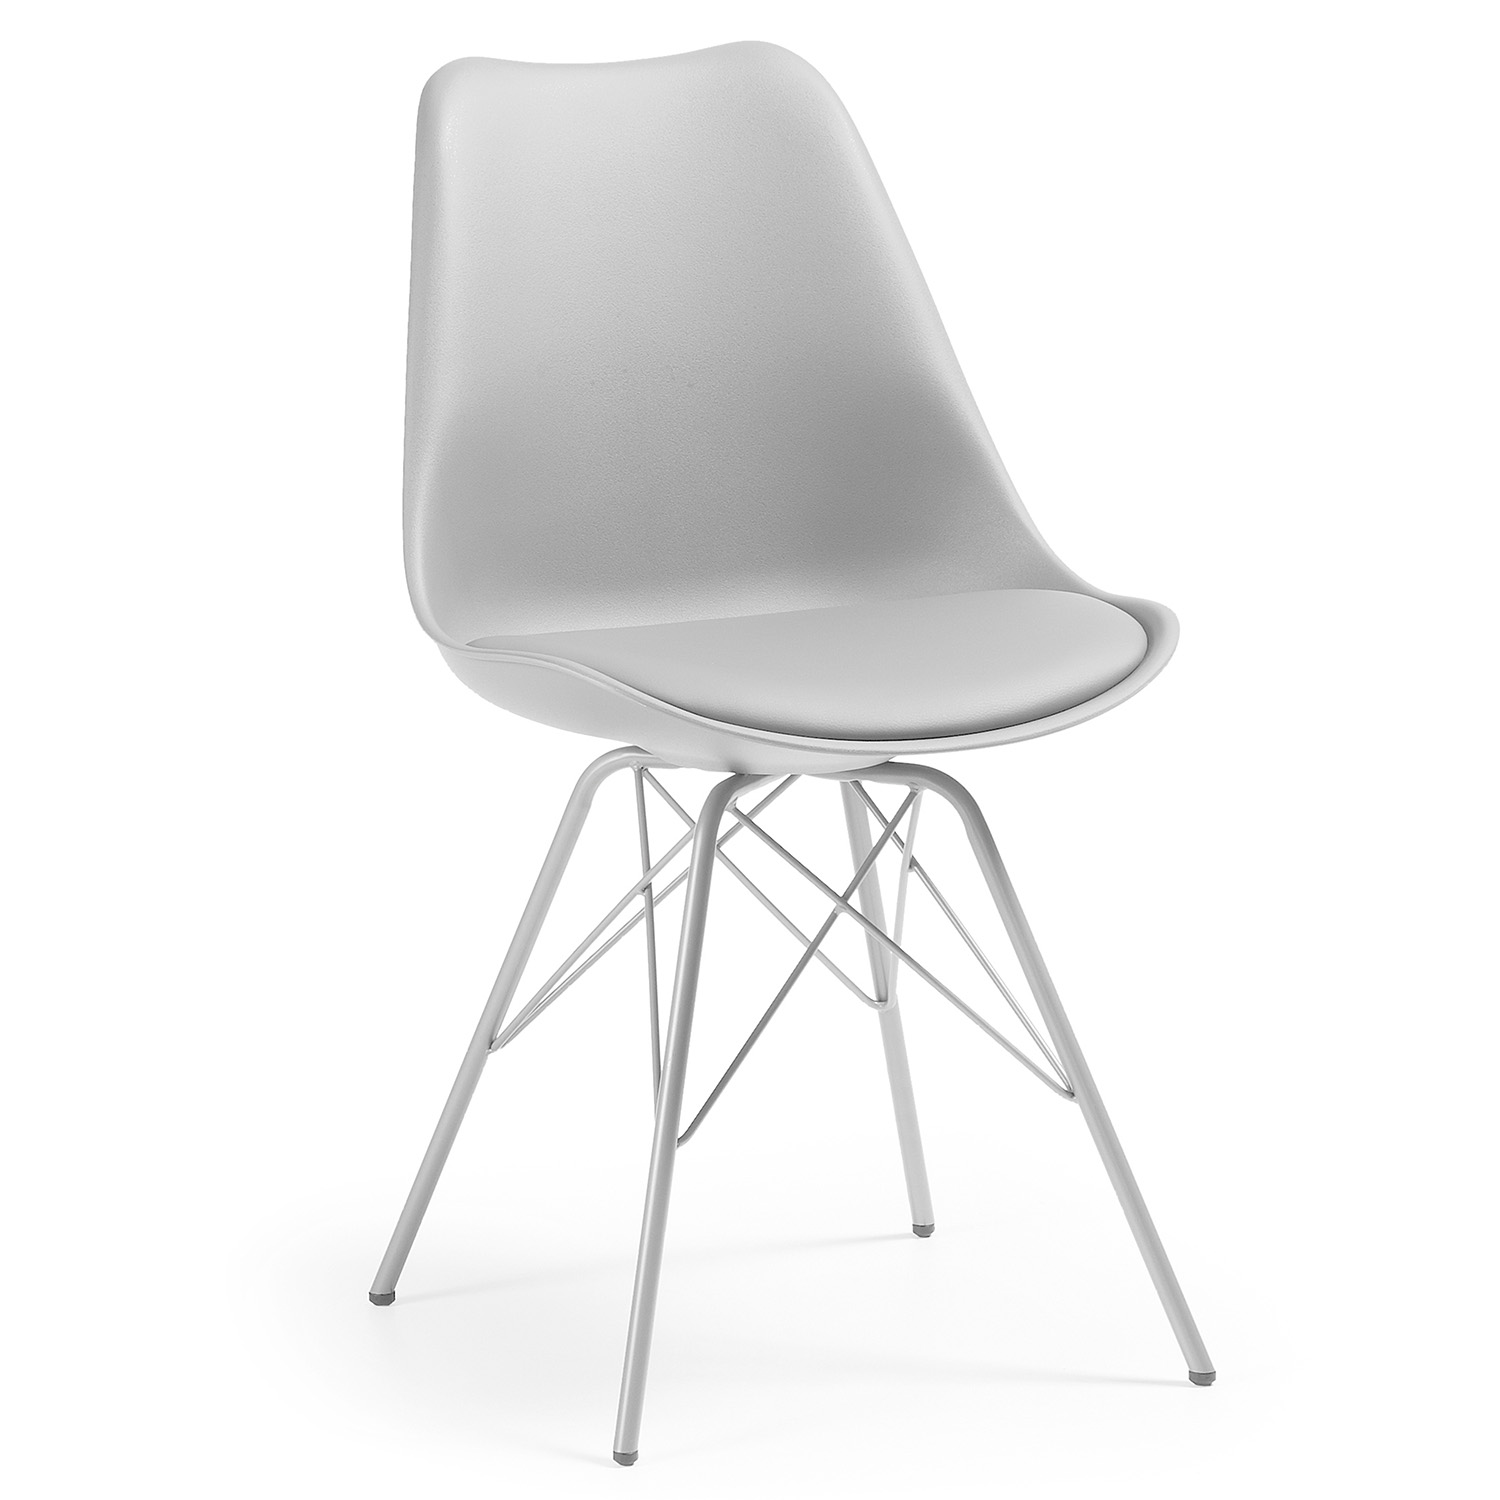 LAFORMA Lars spisebordsstol  grå plastik kunstlæder og stål